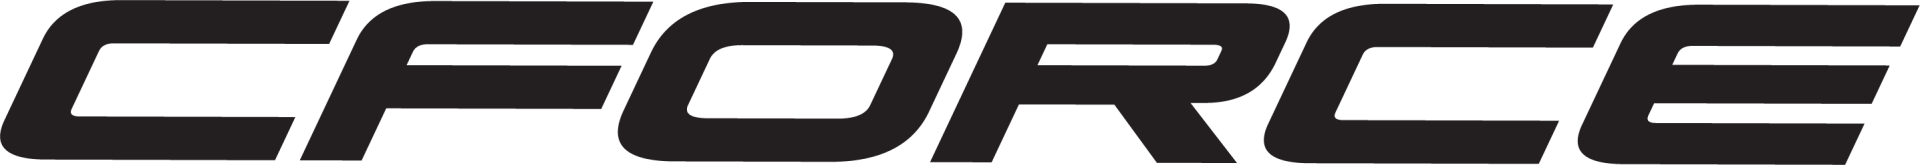 CFORCE 400 Logo